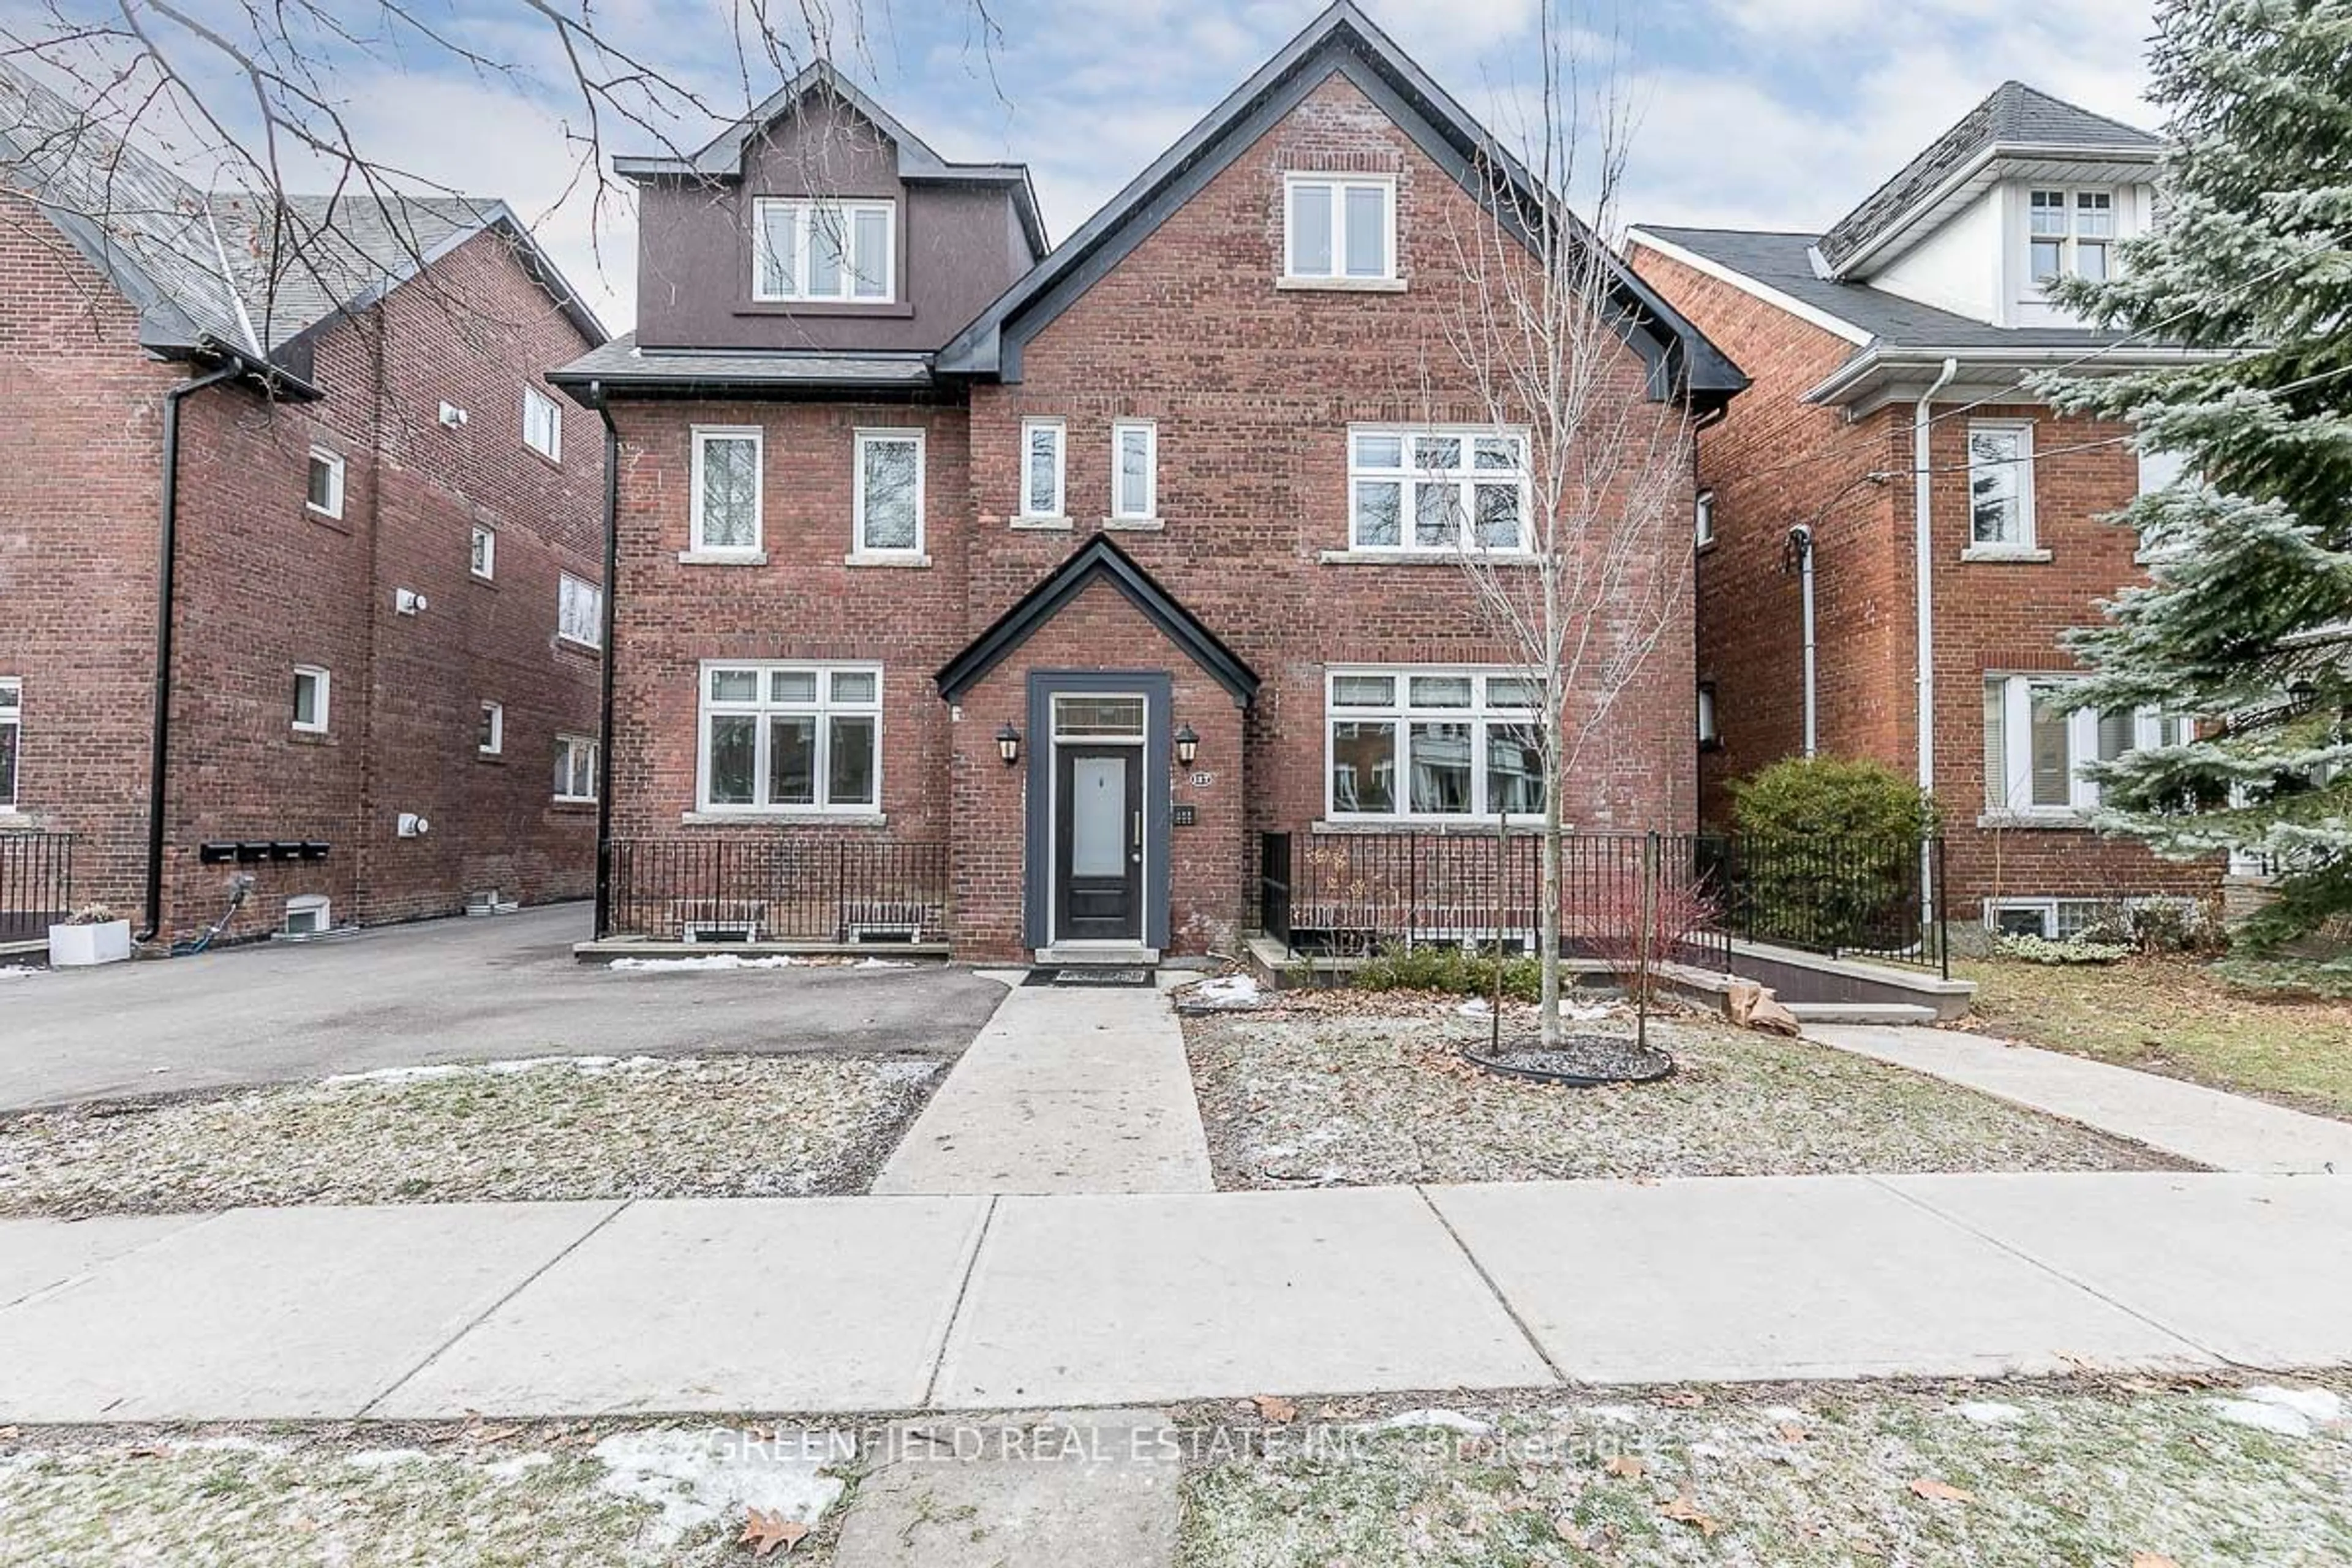 Home with brick exterior material for 117 Chaplin Cres, Toronto Ontario M5P 1A6